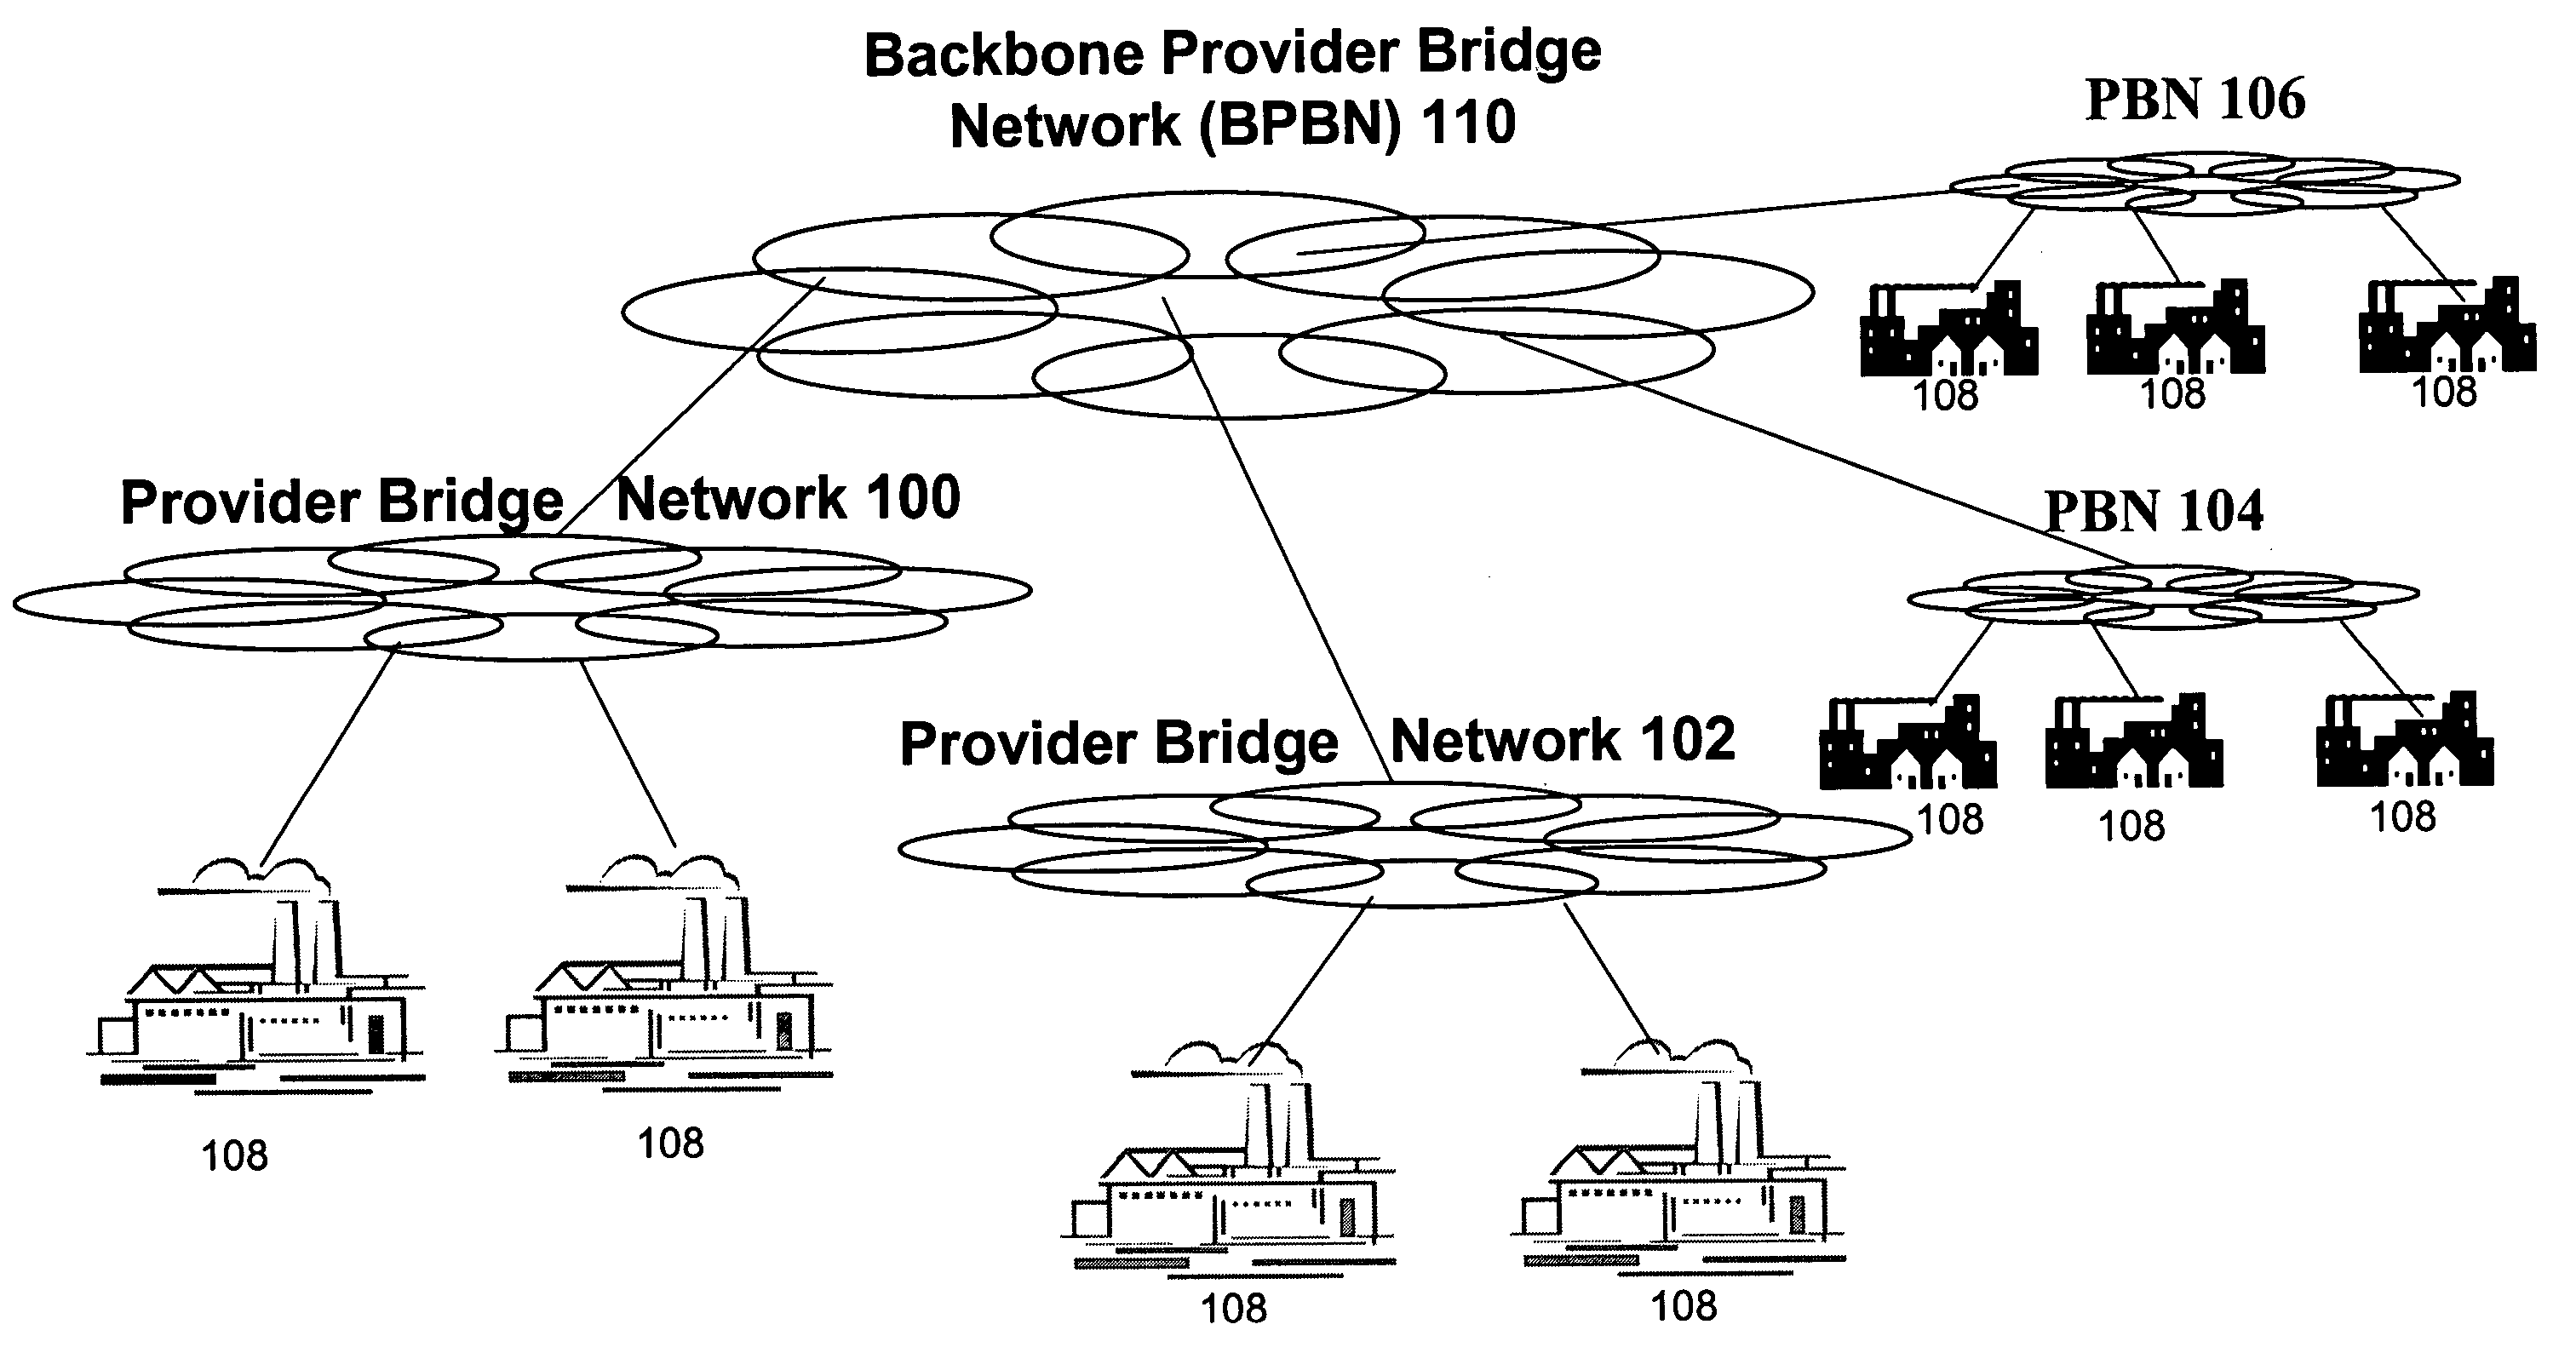 Backbone provider bridging networks